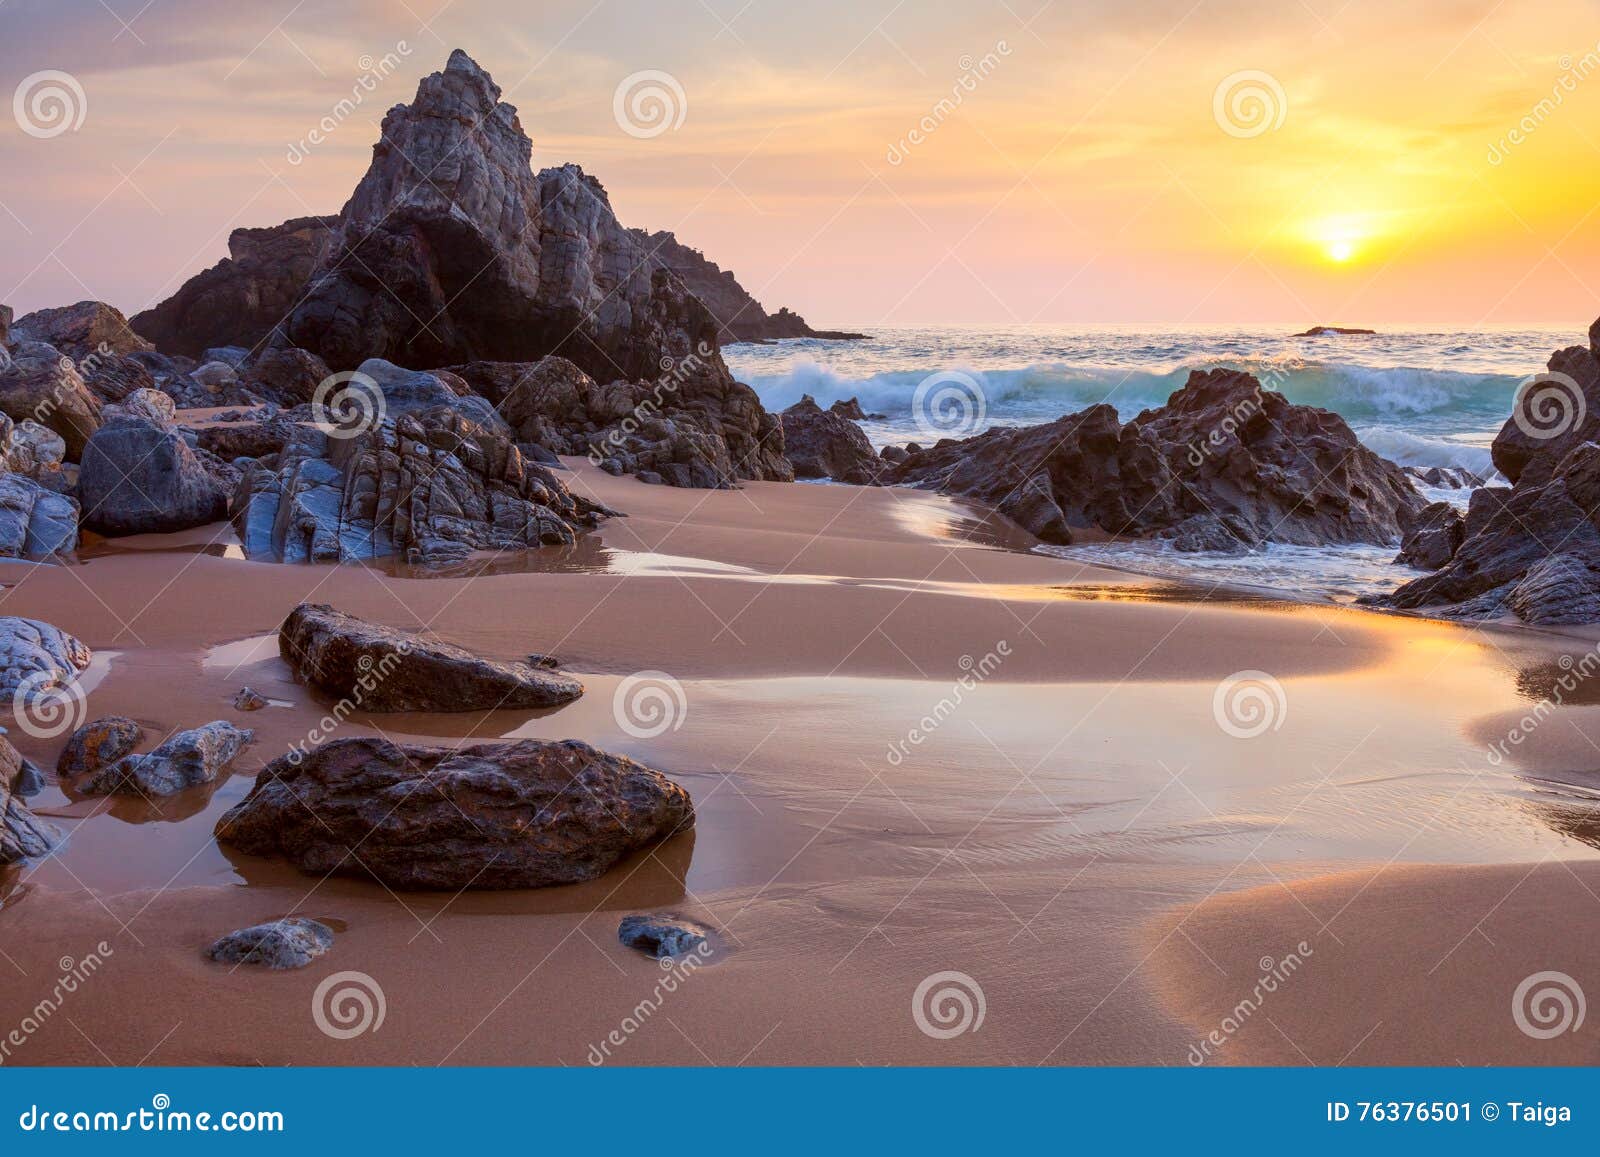 landscape of big rocks the ocean beach at sundown